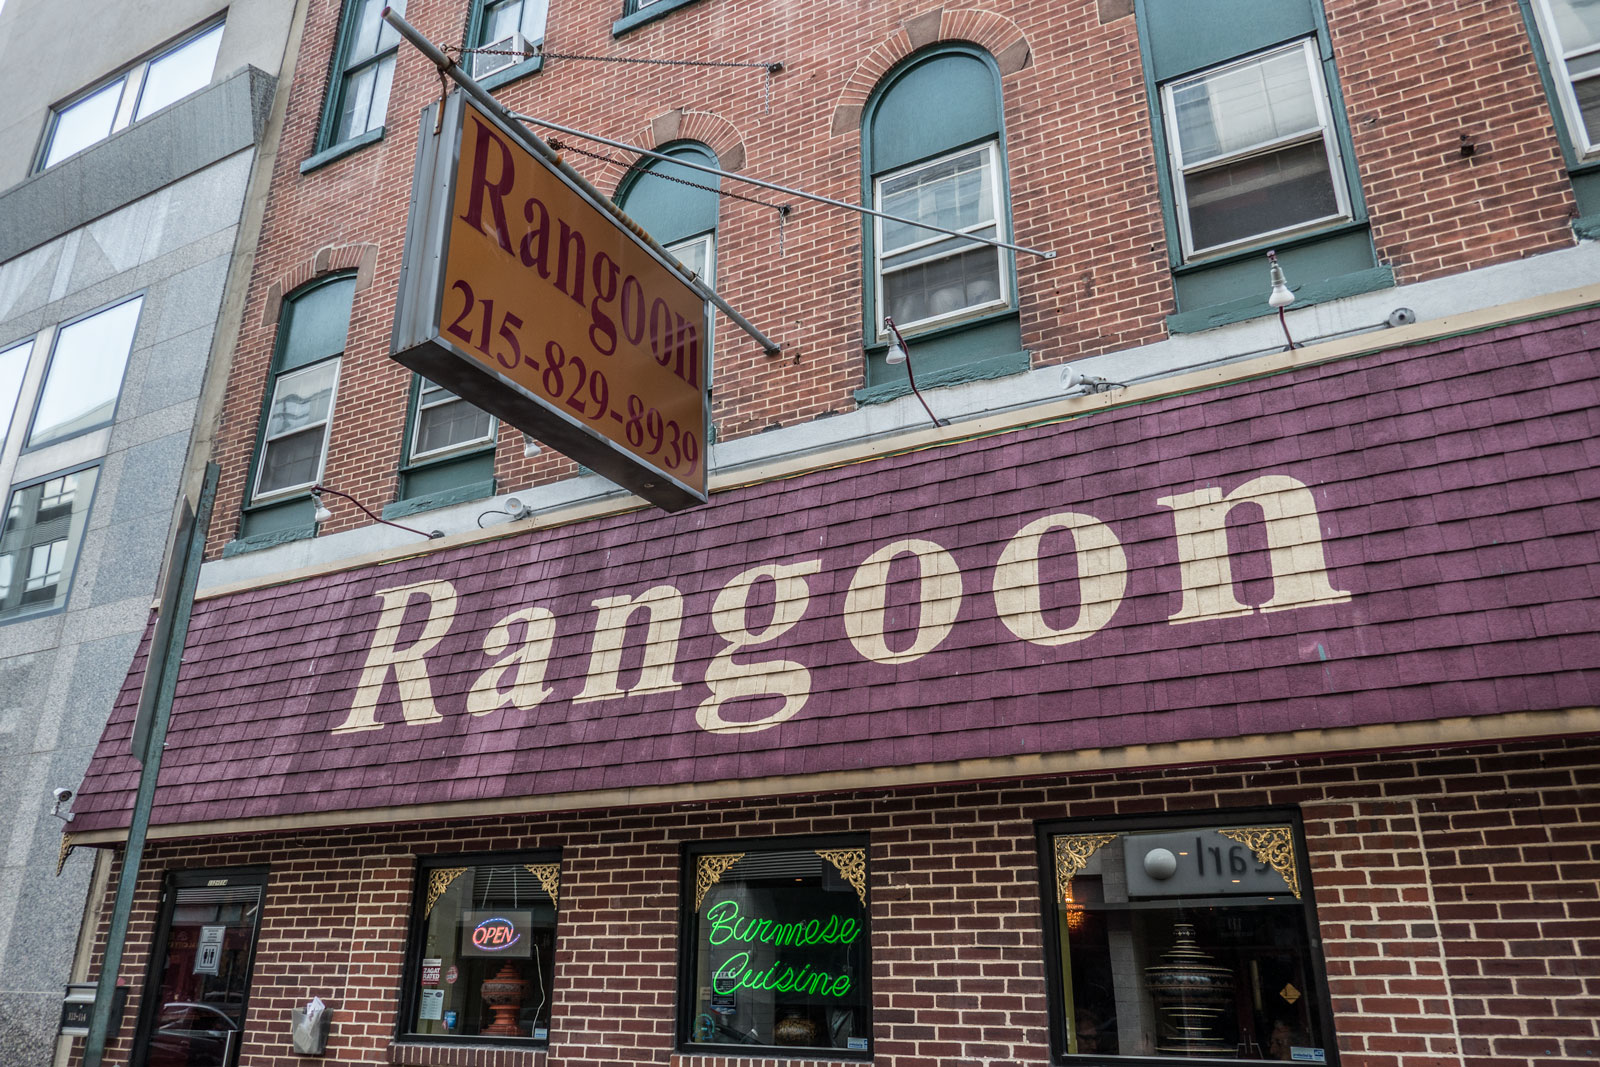 Rangoon Burmese Restaurant Chinatown Philadelphia